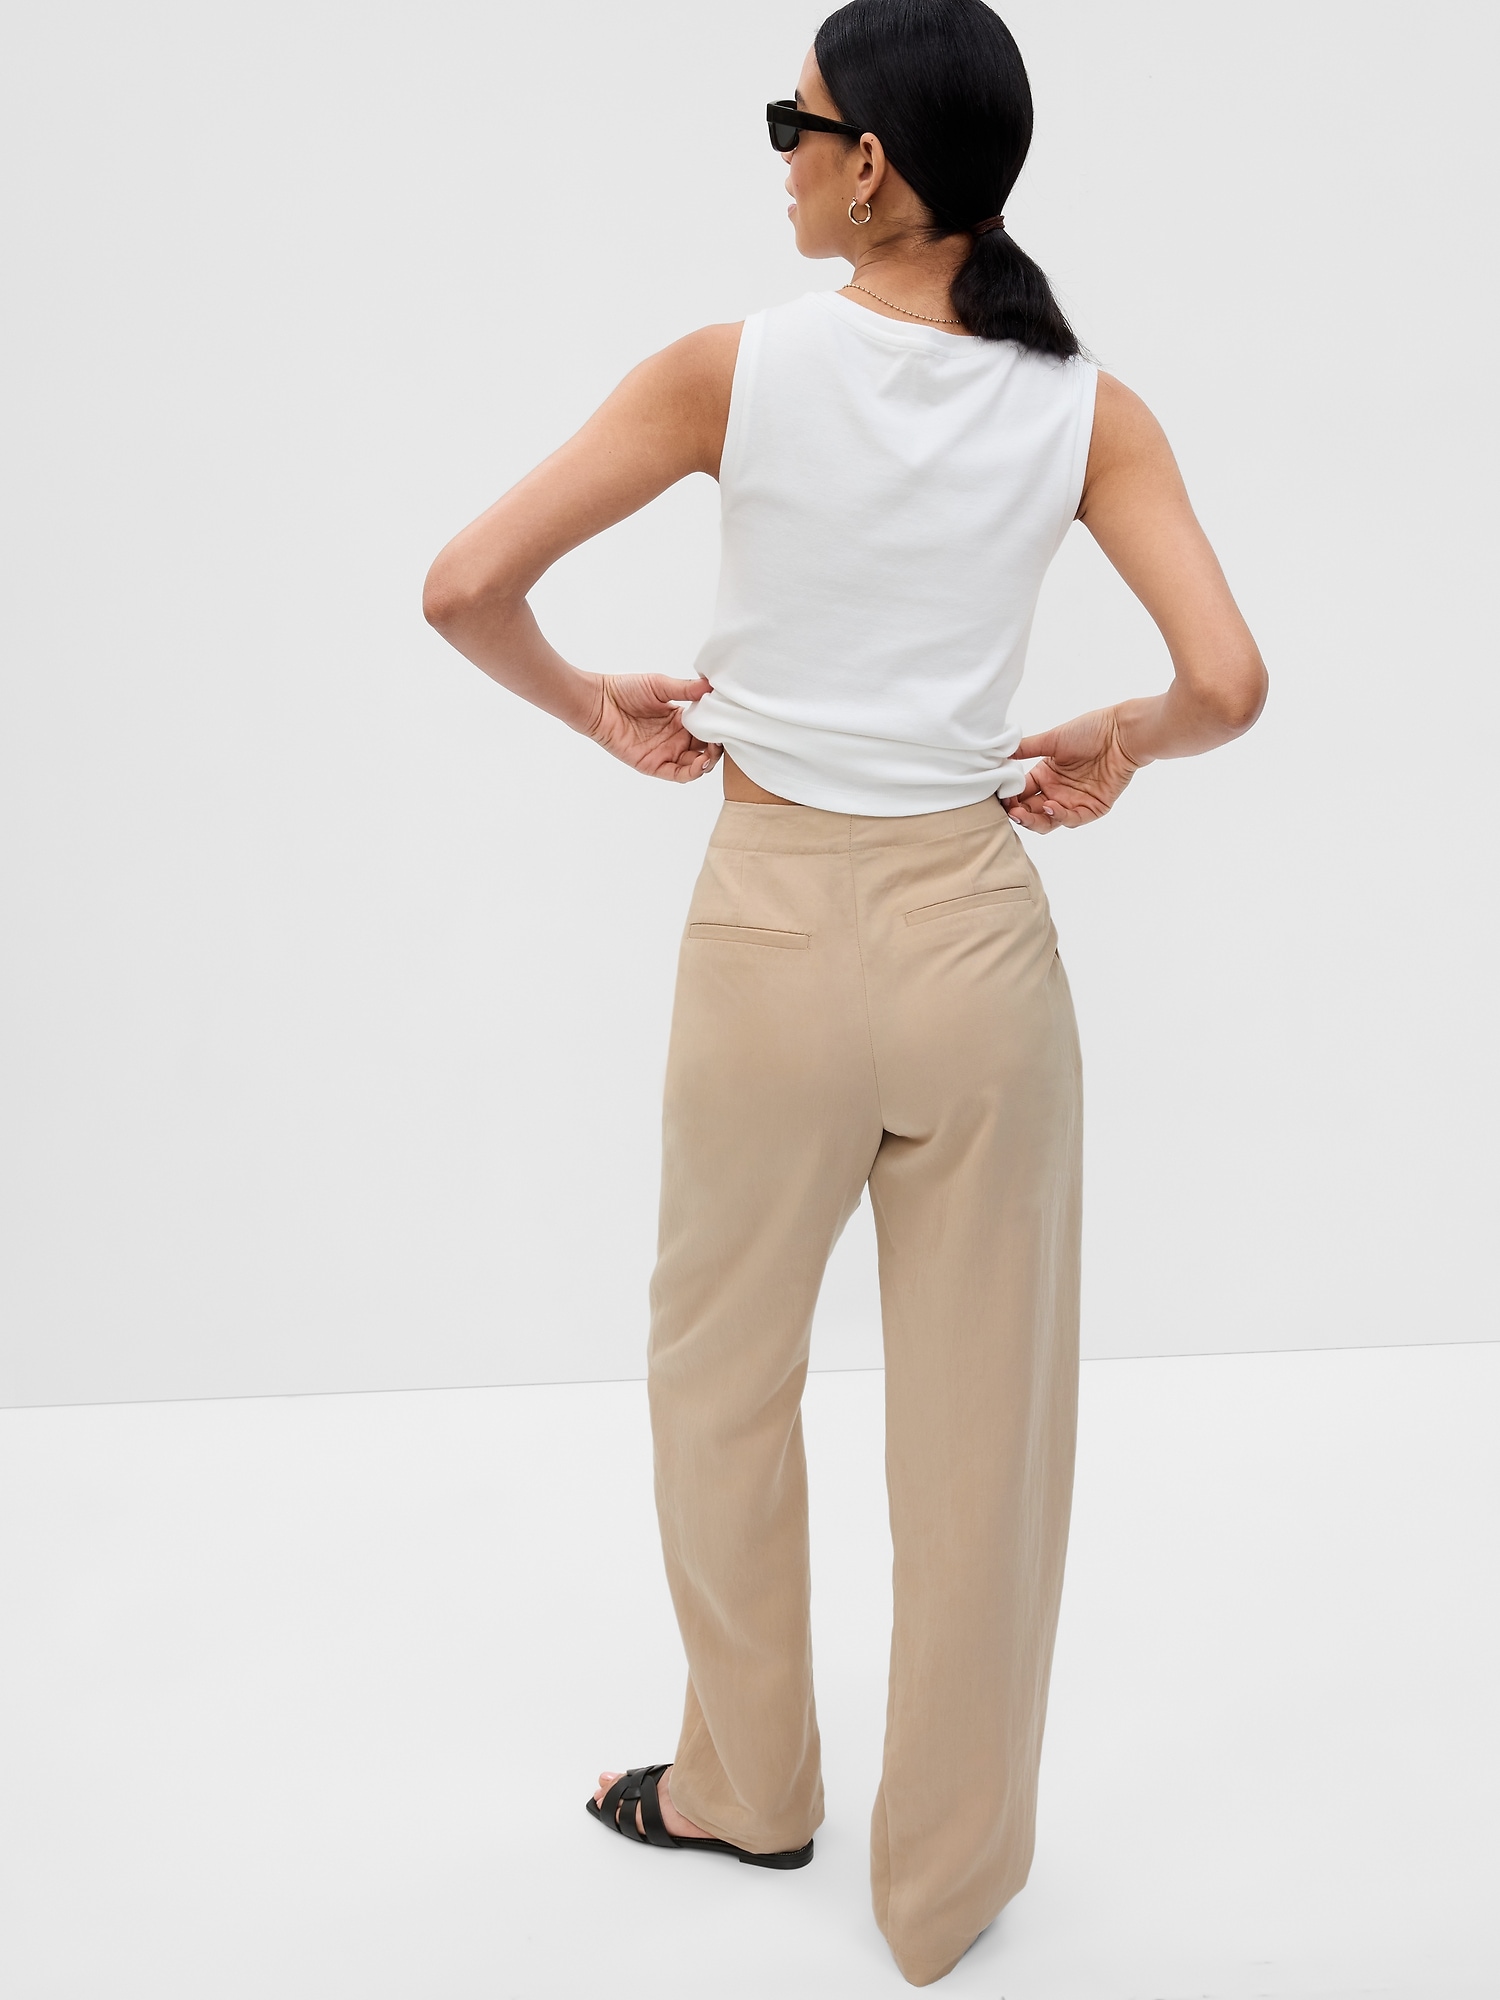 Wide twill trousers - Light beige - Ladies | H&M IN-anthinhphatland.vn